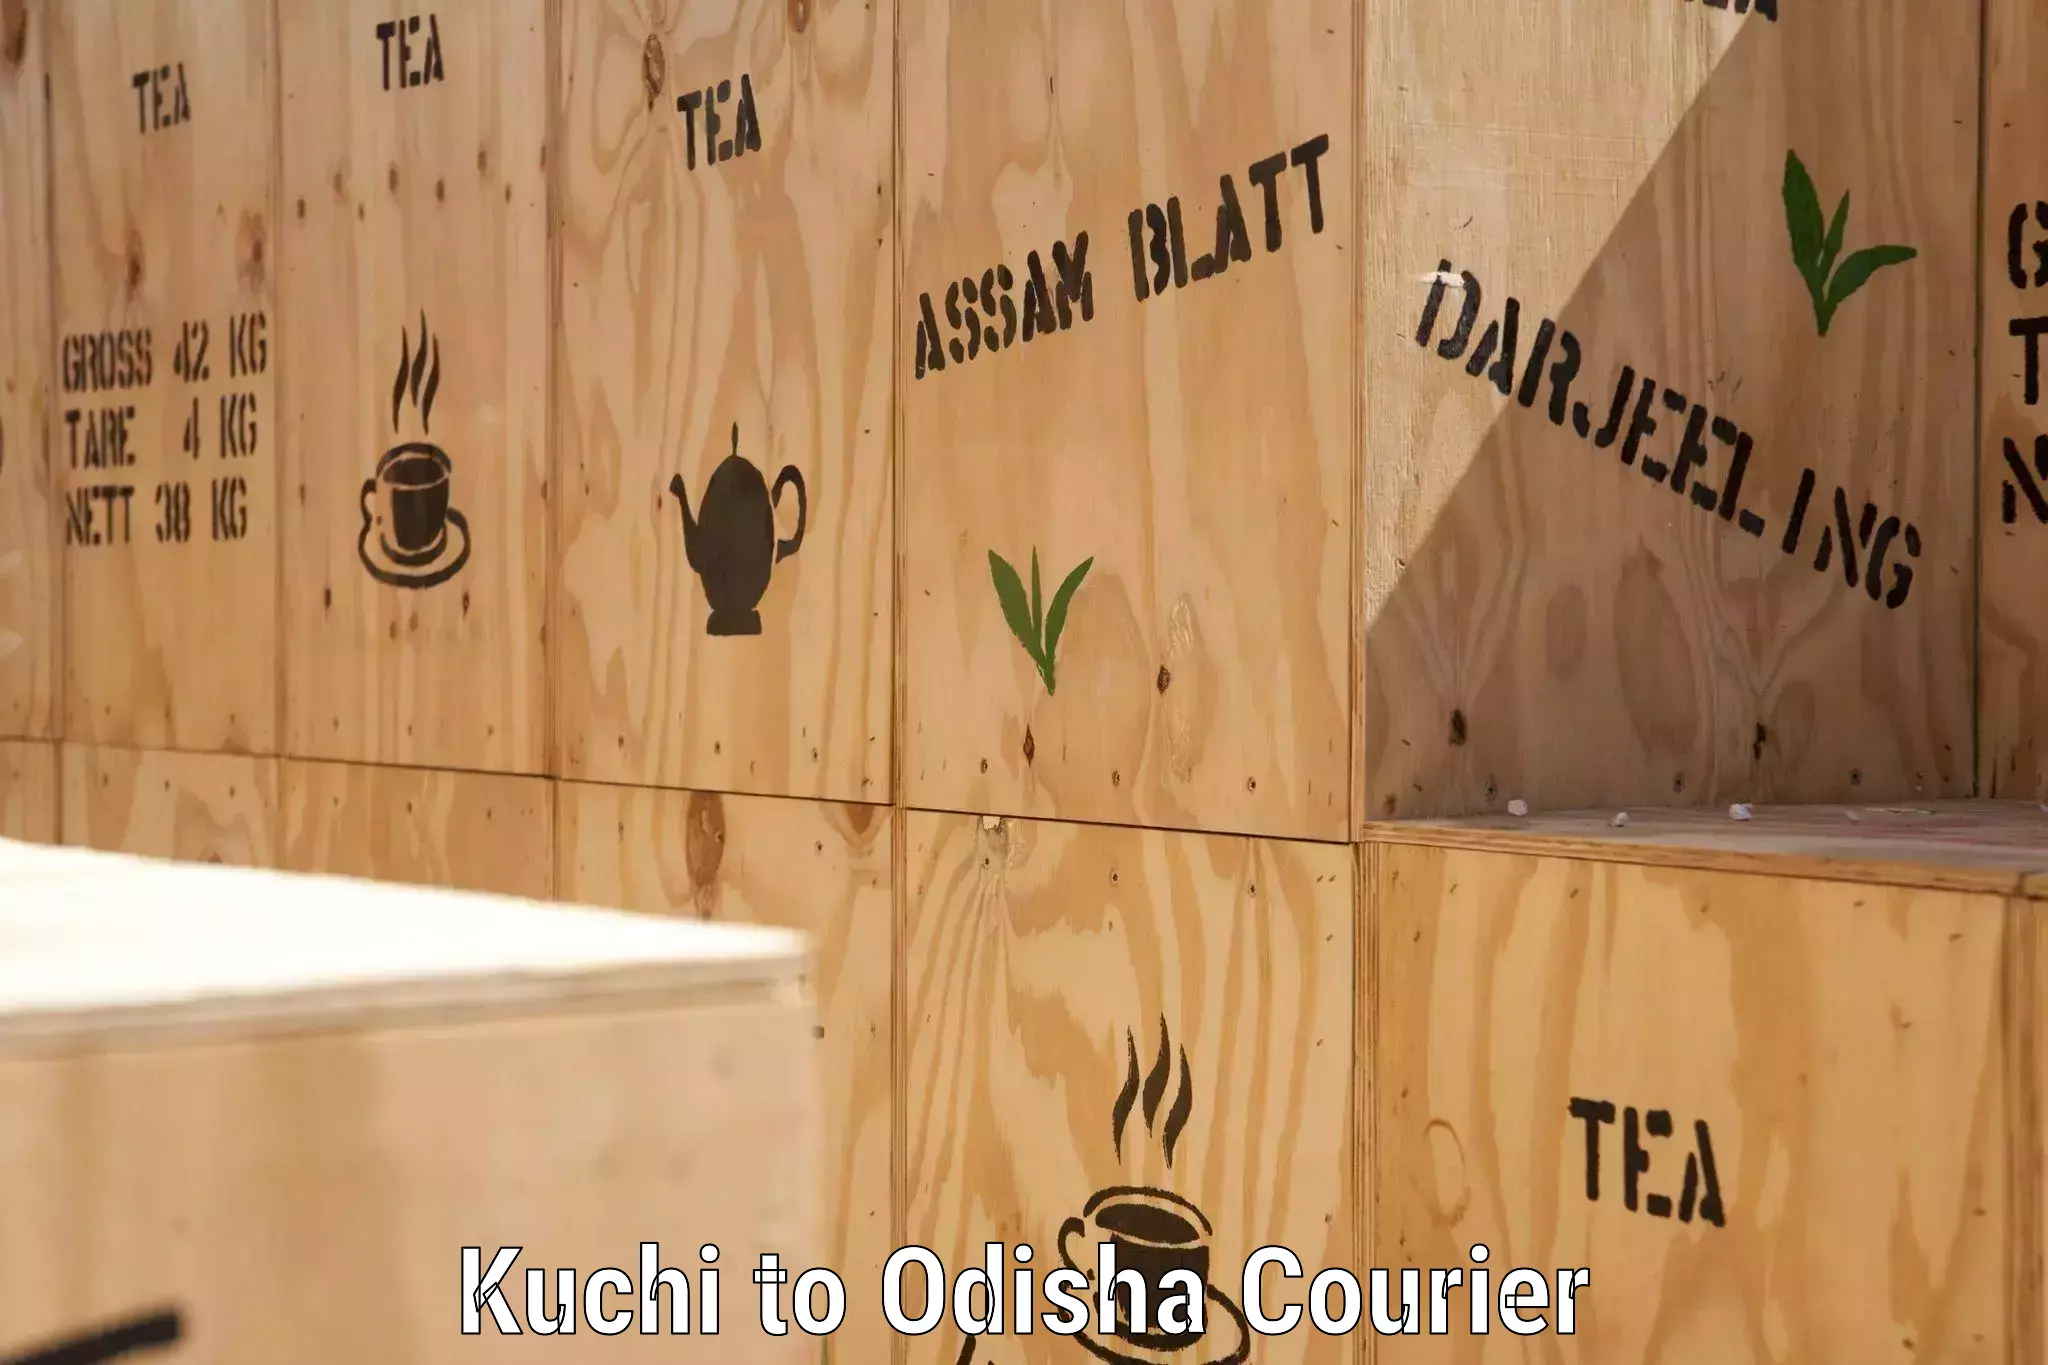 Global shipping networks Kuchi to Odisha